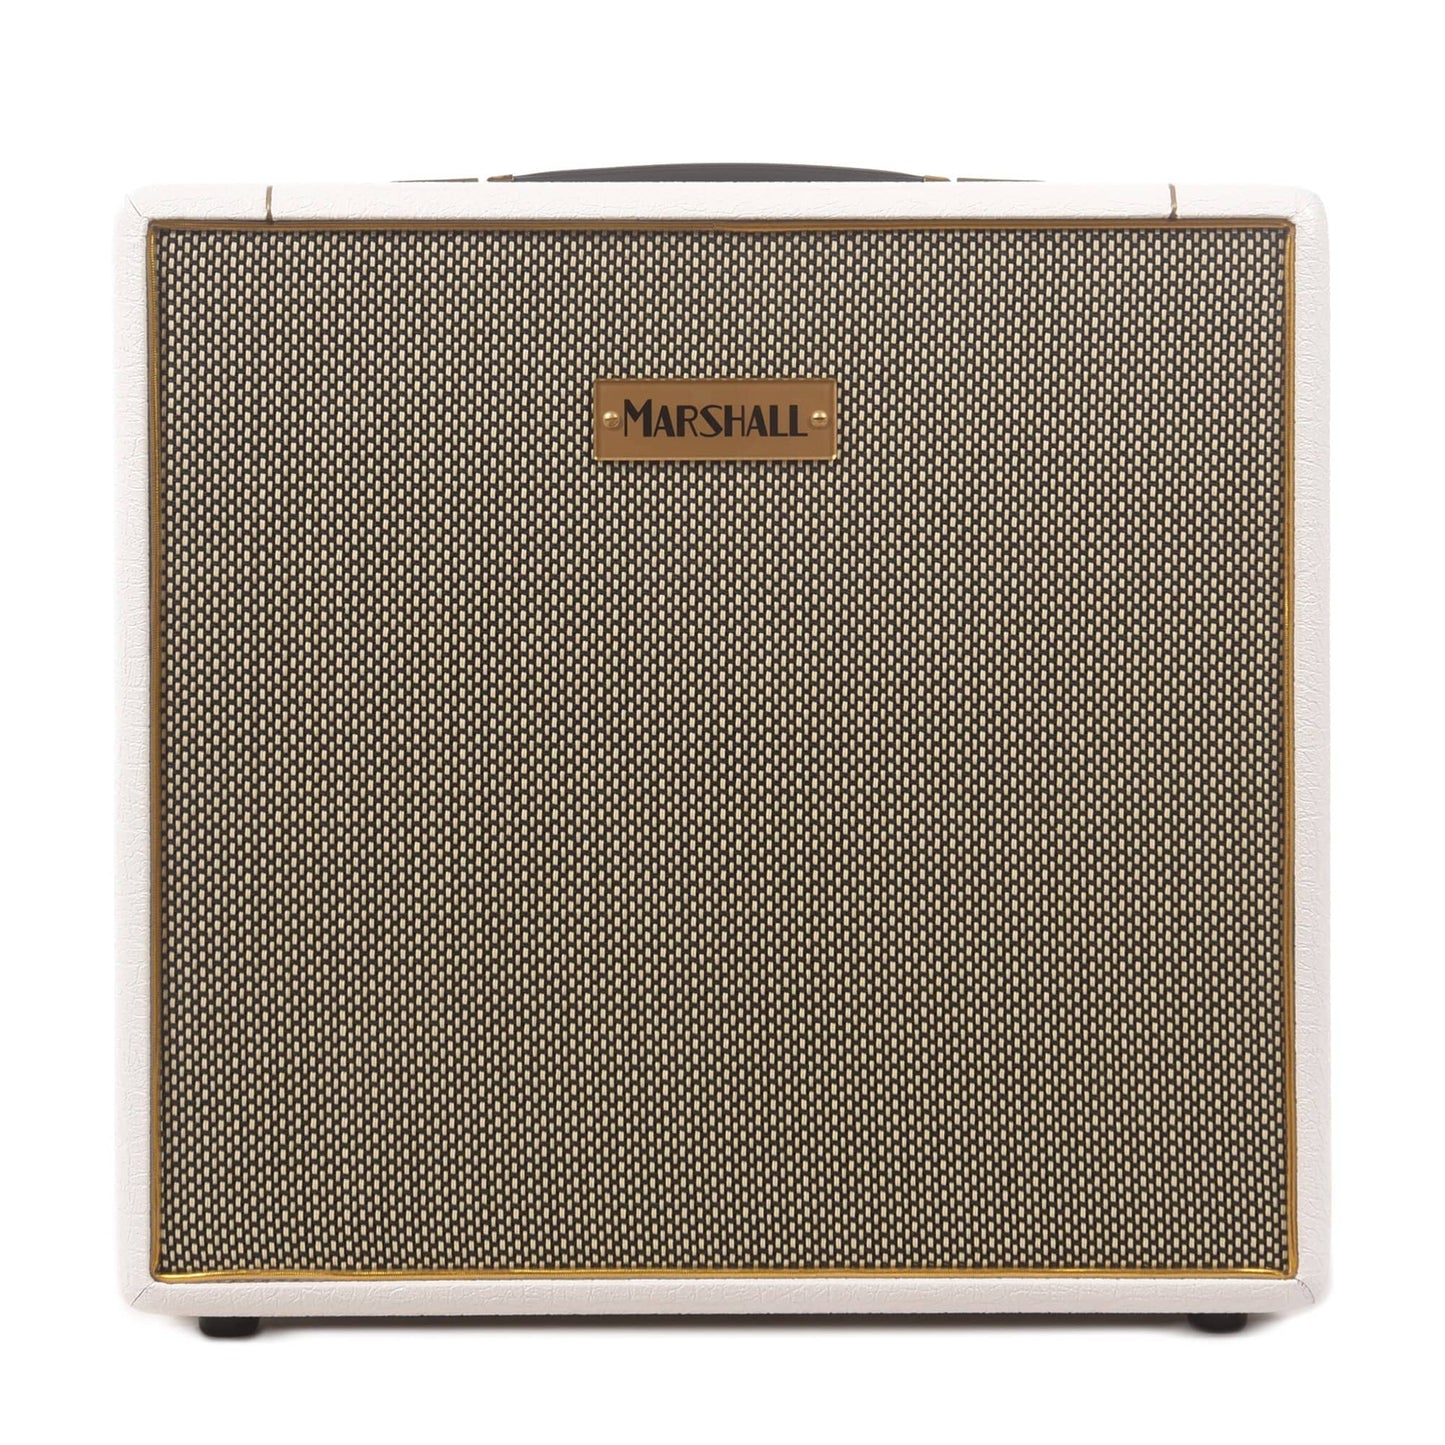 Marshall Limited Edition SV112 Studio Vintage White Elephant Grain Plexi 1x12 Speaker 70W Cabinet 16 Ohm Mono Amps / Guitar Cabinets